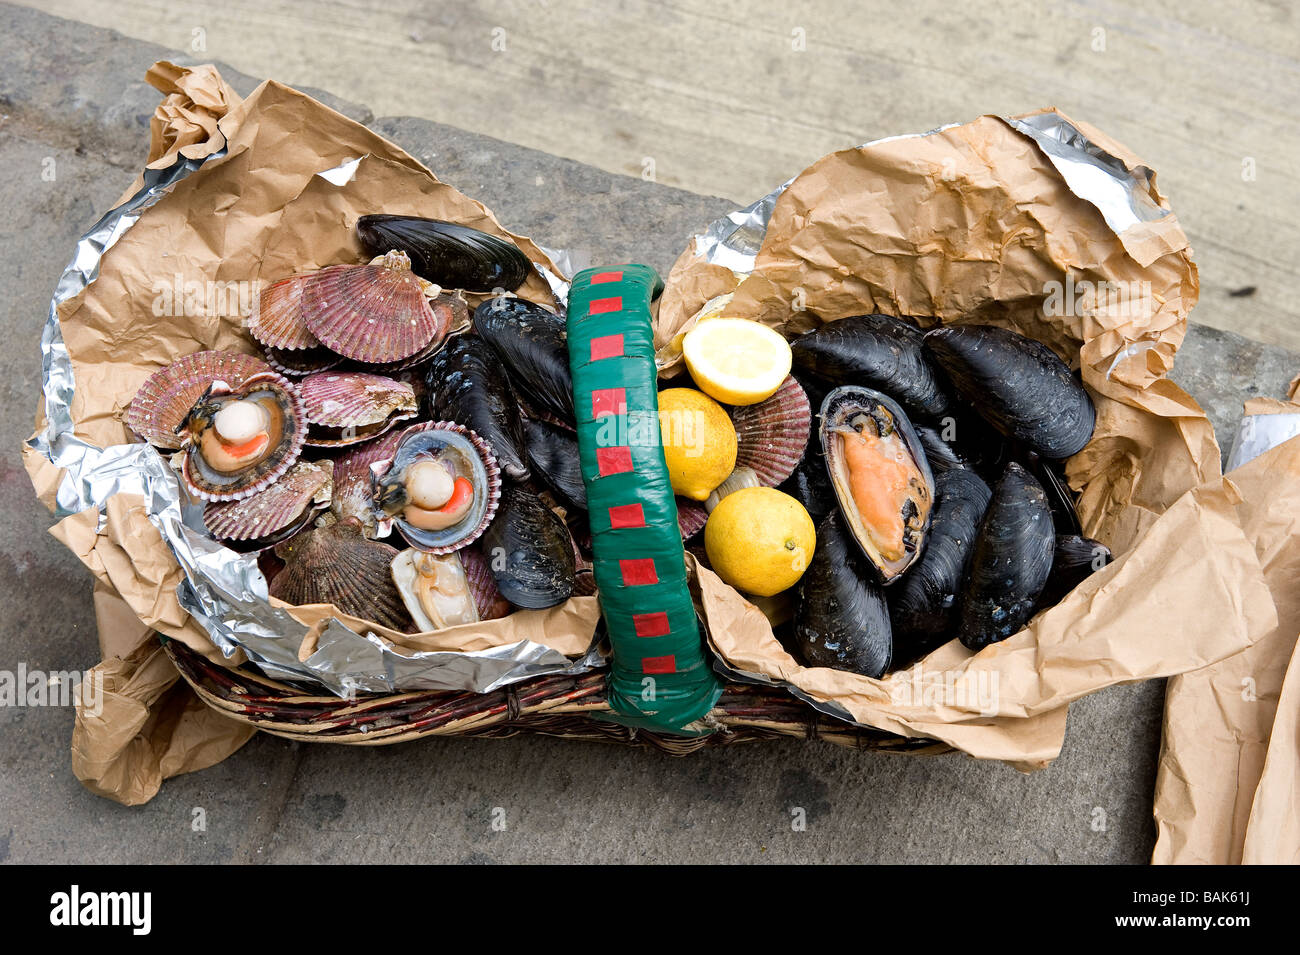 Chile, Valparaiso Region Valparaiso, Meer Lebensmittel-Korb auf der Straße verkauft Stockfoto